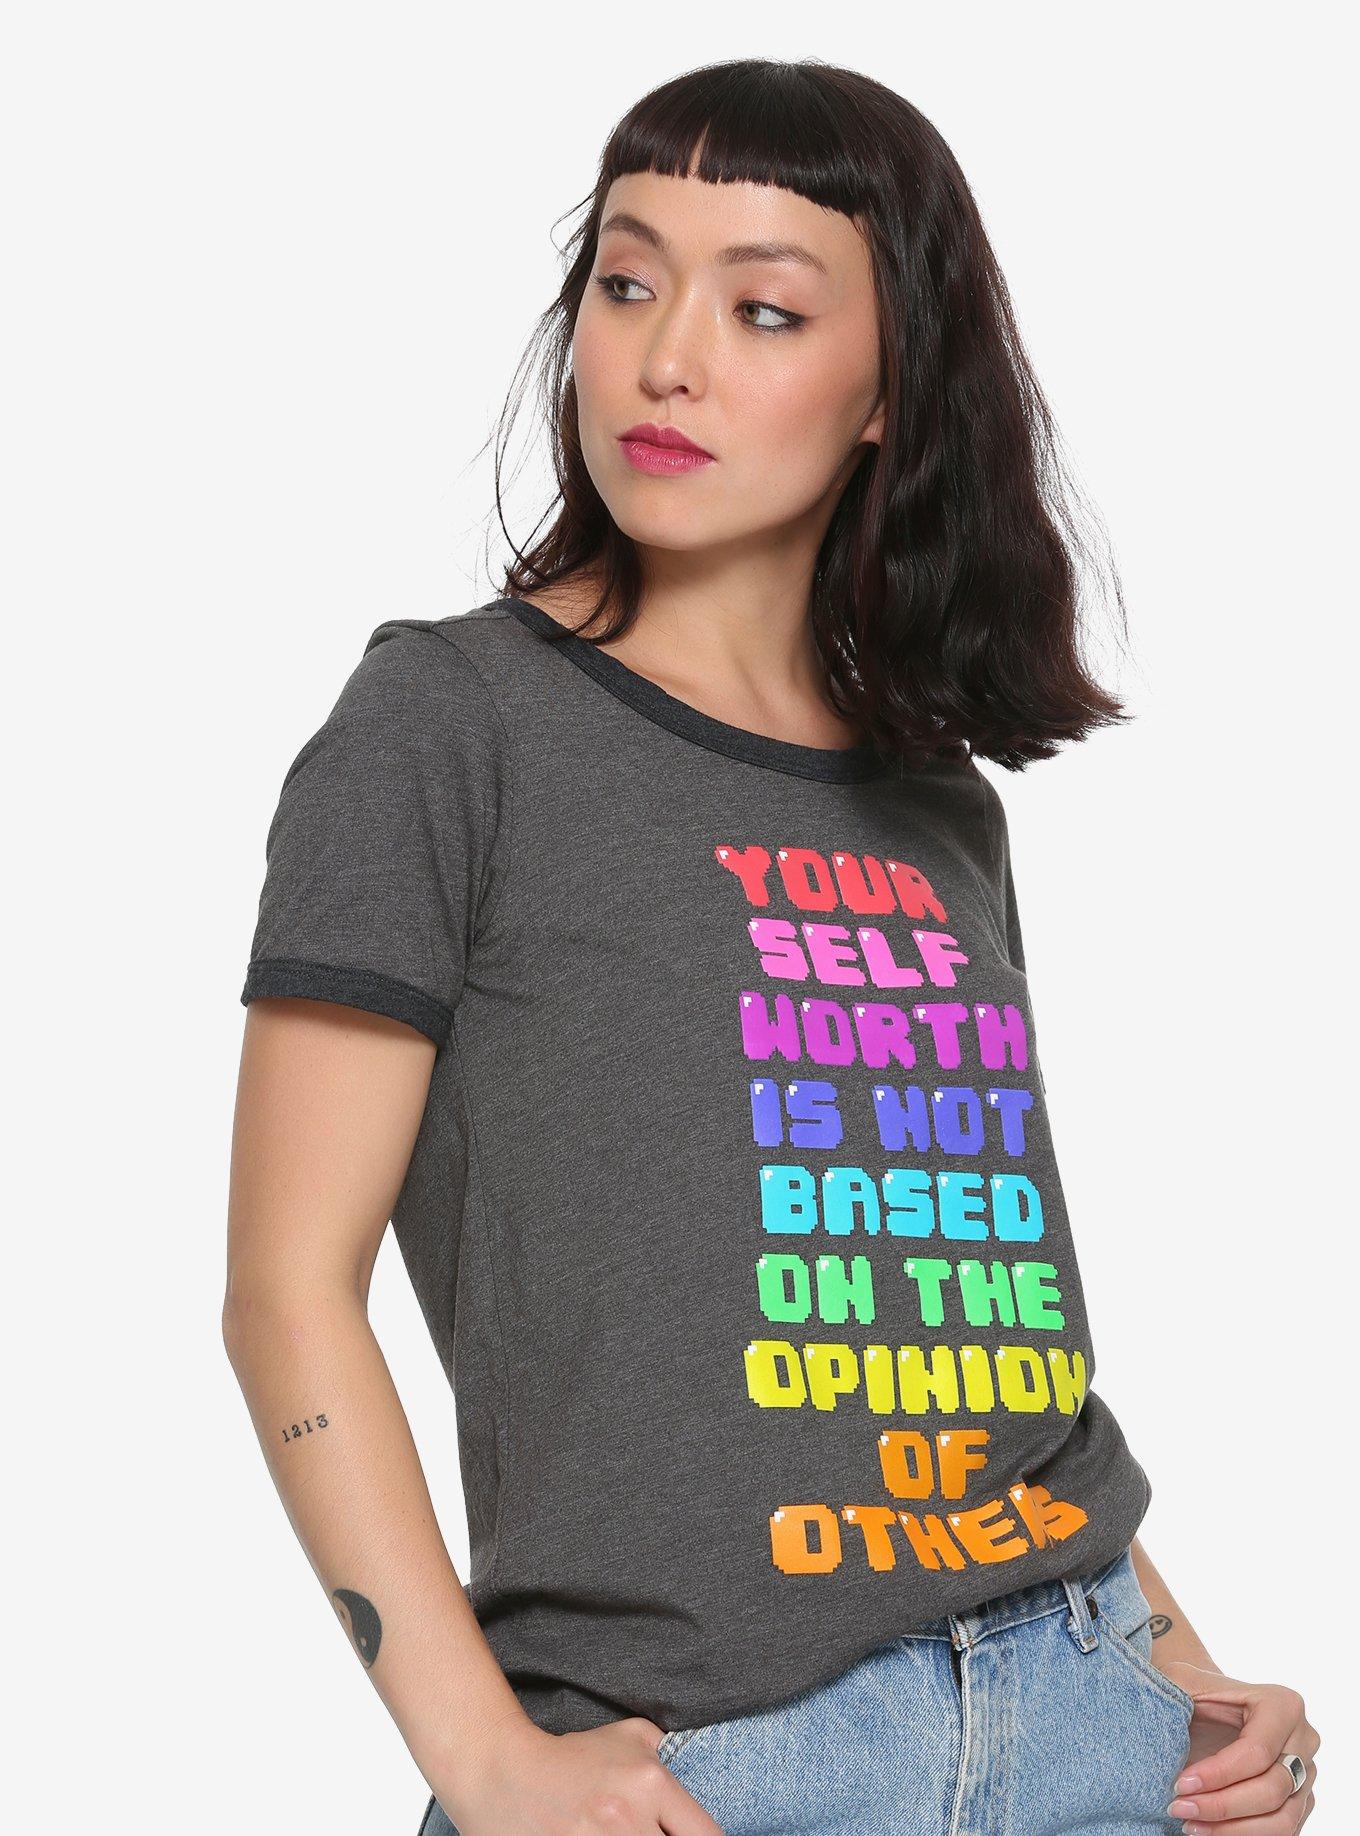 Jessie Paege Rainbow Self Worth Girls T-Shirt Hot Topic Exclusive, BLACK, hi-res